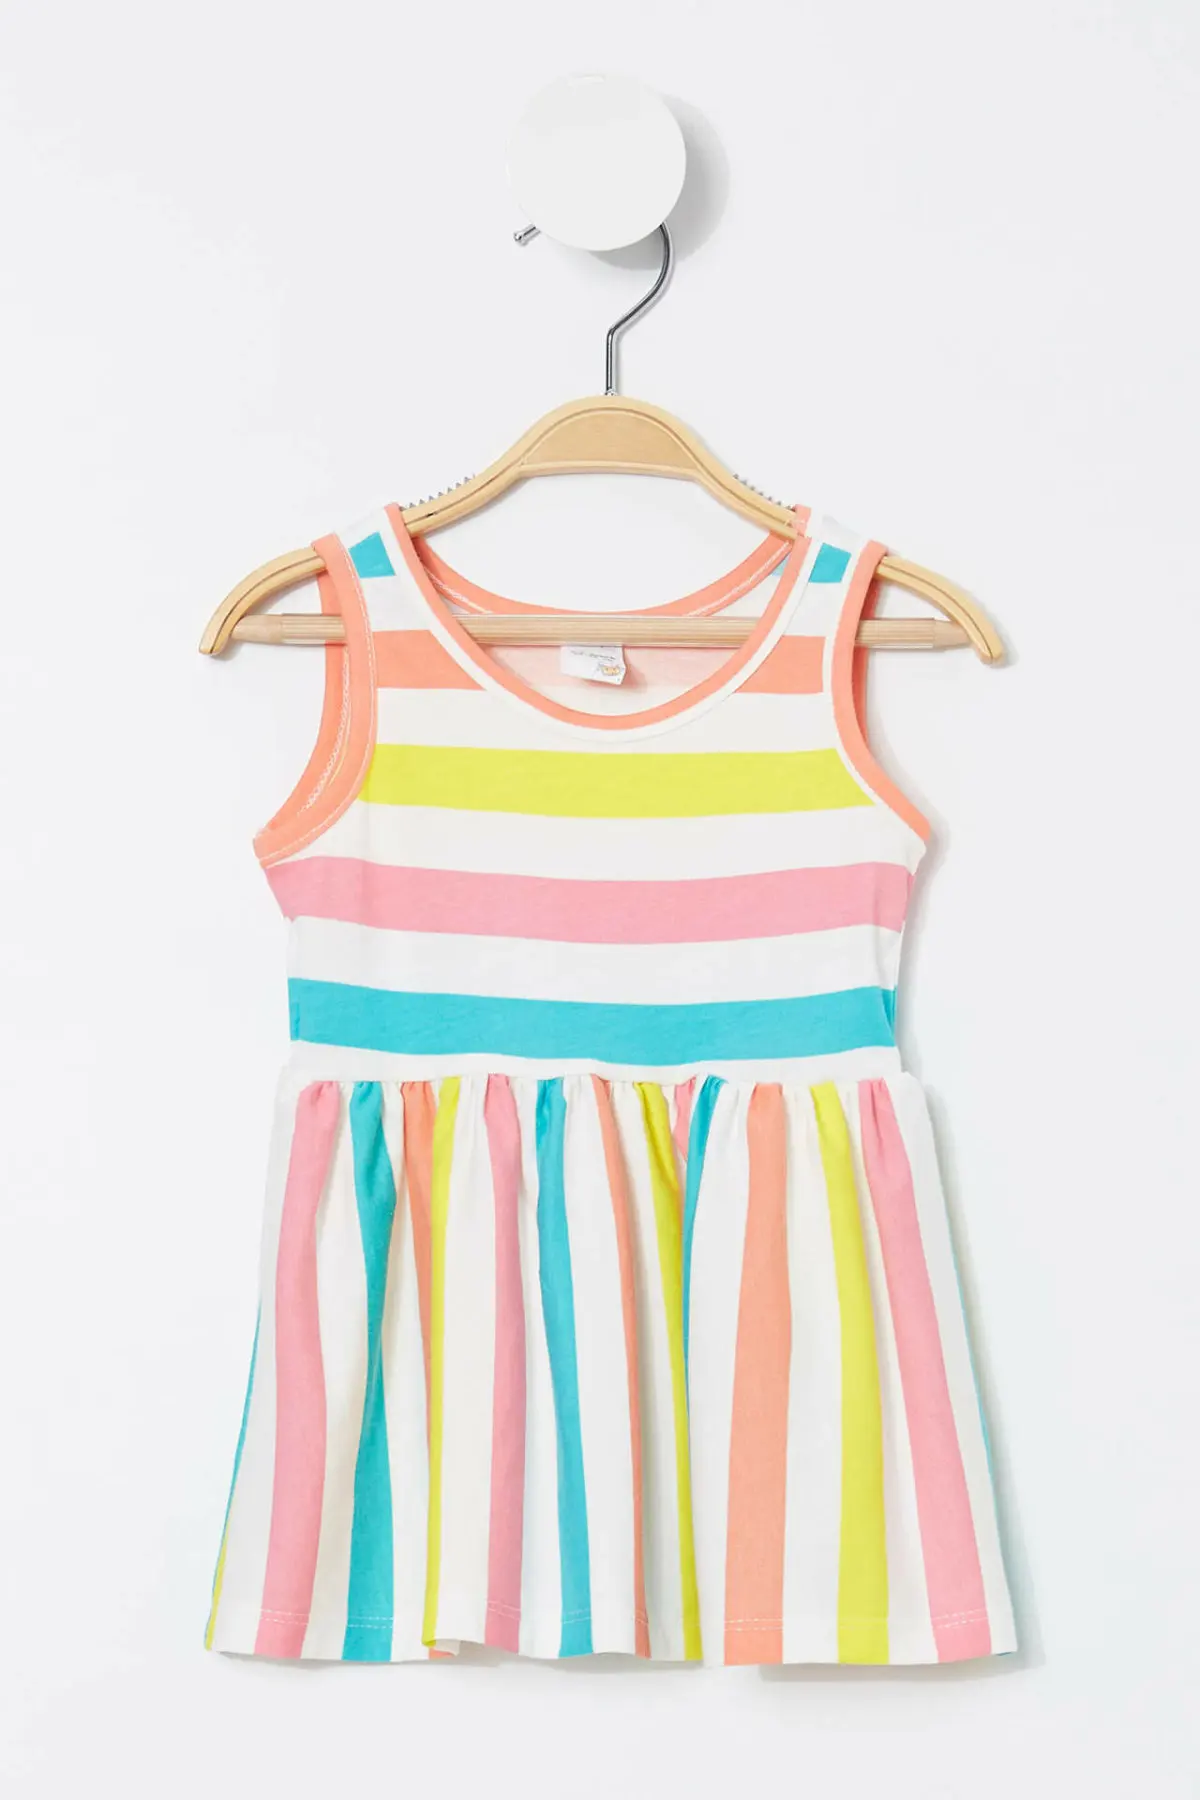 DeFacto Summer Girl Woven Sling Dress Kids Fashion O neck Striped ...